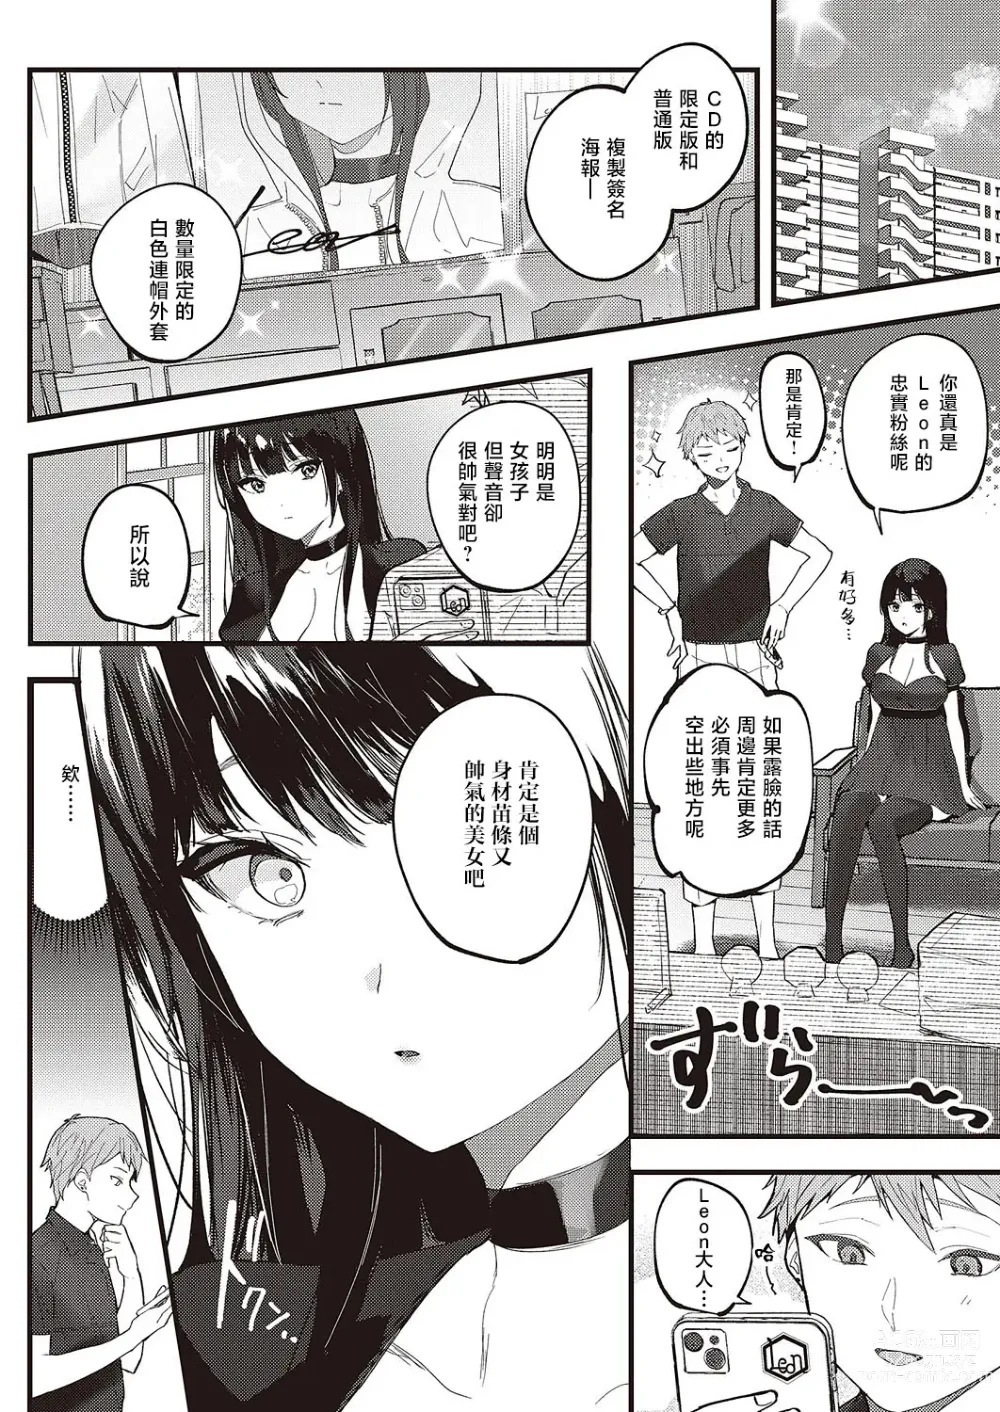 Page 6 of manga Cool Voice wa Kimi no Tame